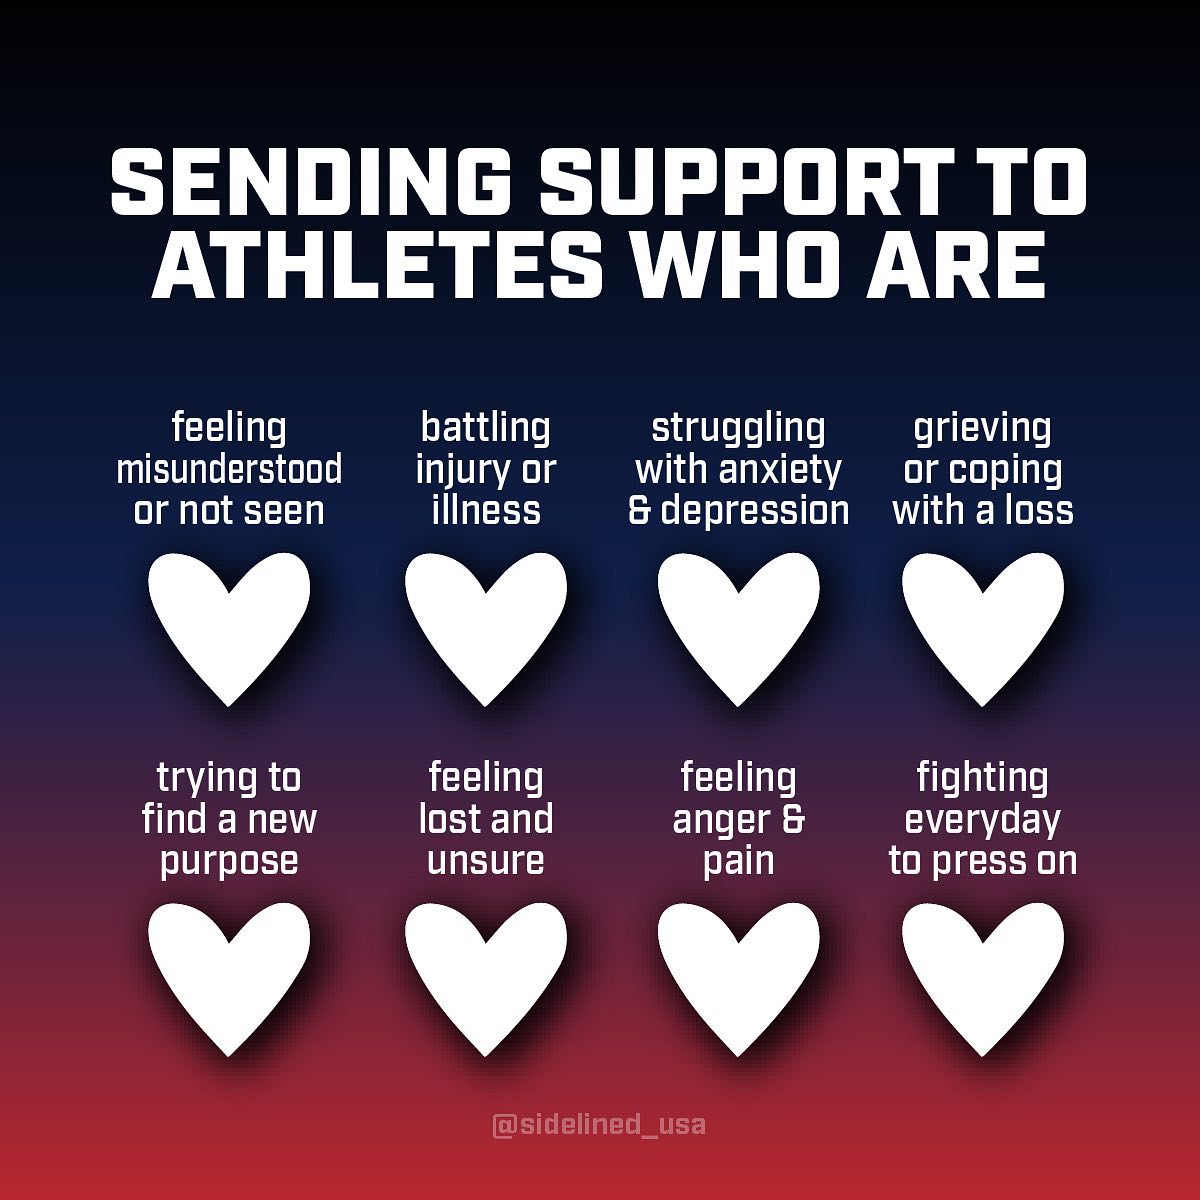 Thinking of you. You got this ♥️💙

#athlete #athletementalhealth